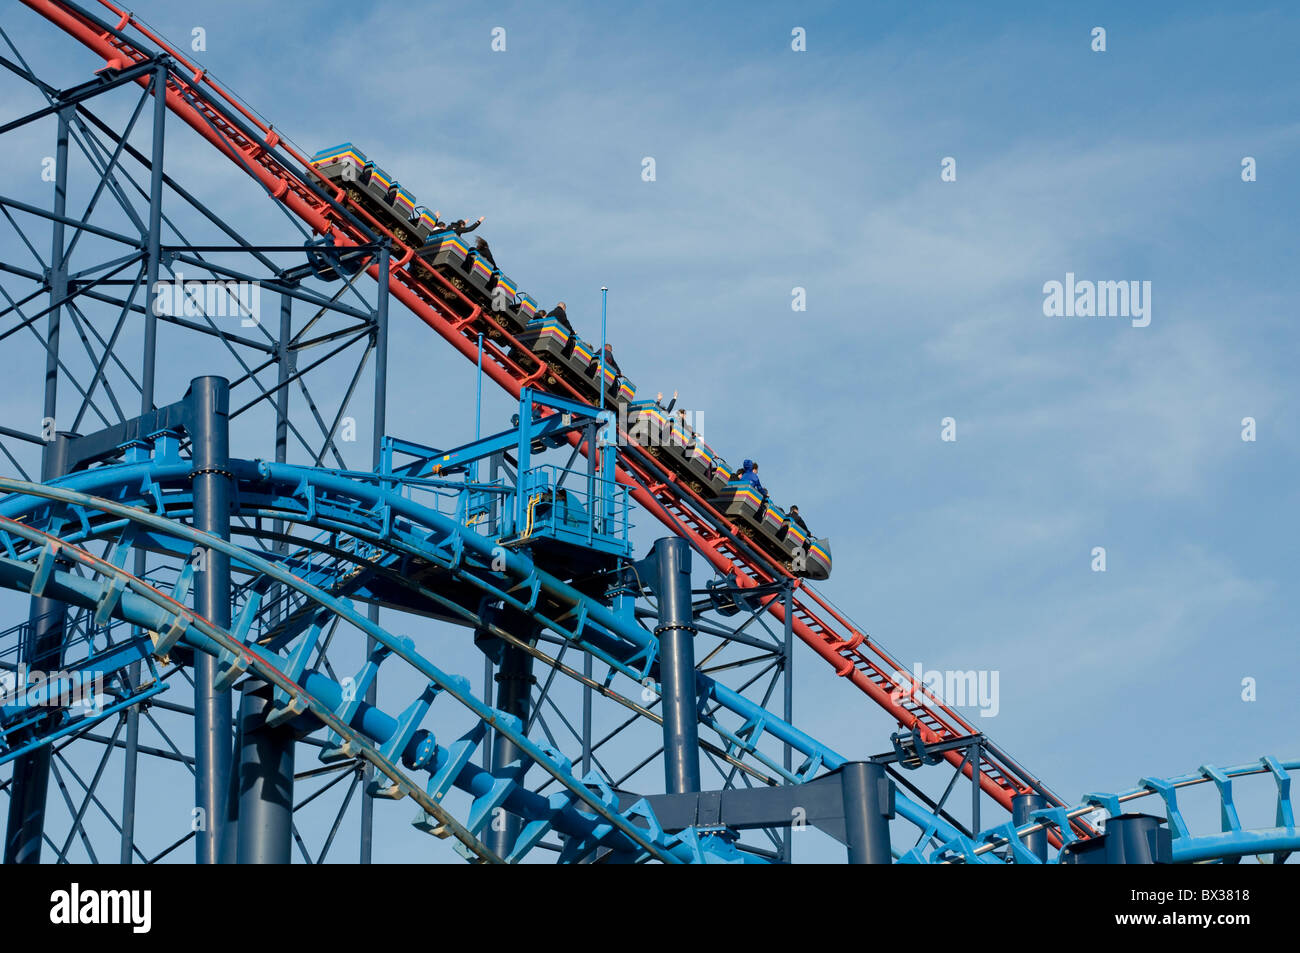 The Pepsi Max Big One roller coaster at Blackpool Pleasure Beach ...